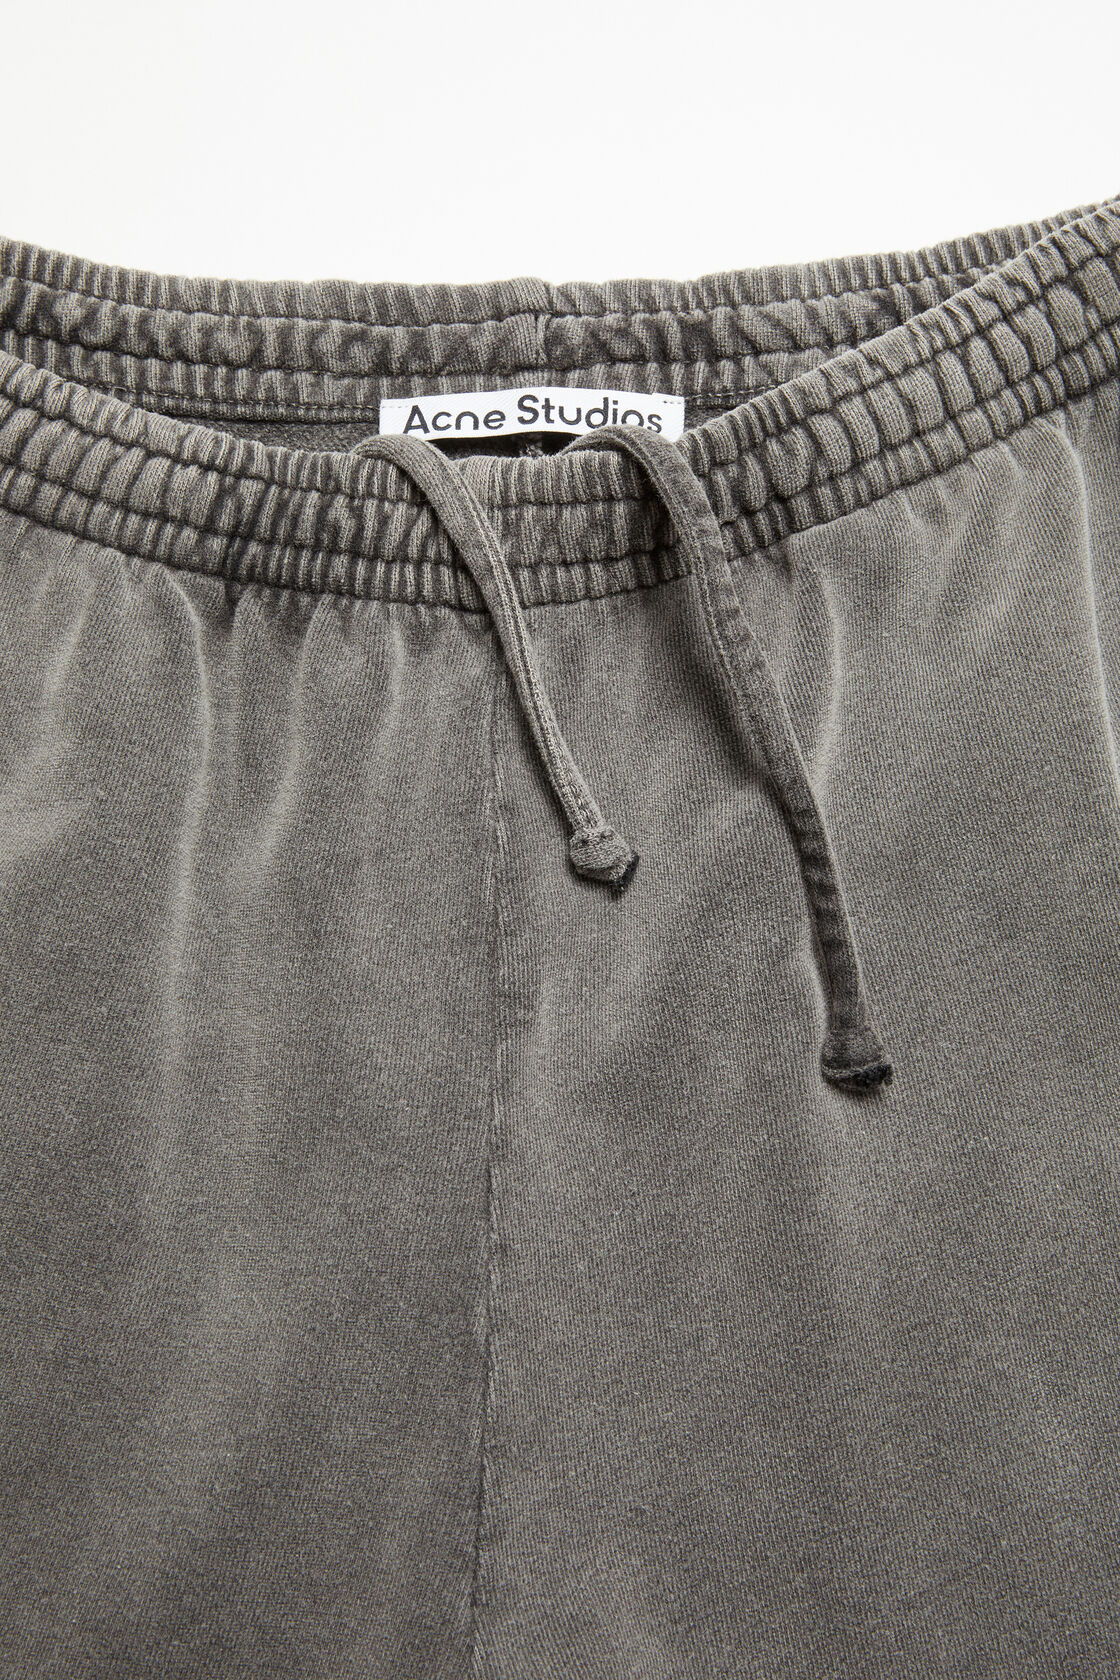 ACNE STUDIOS Vintage Sweatpant in Faded Black